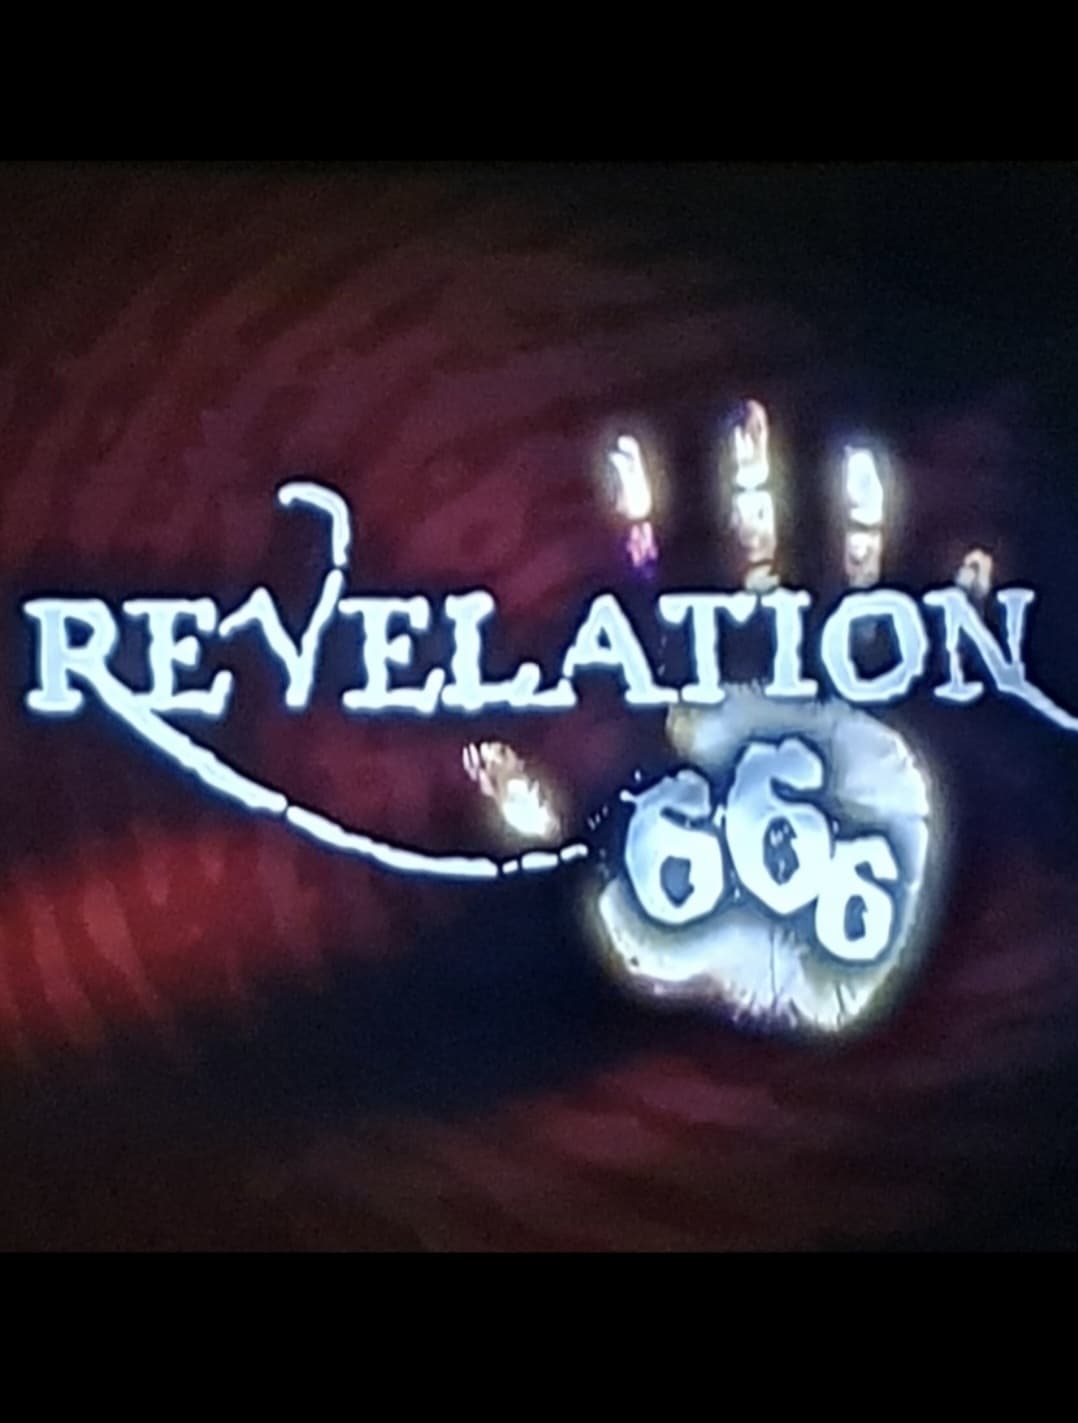 Revelation 666